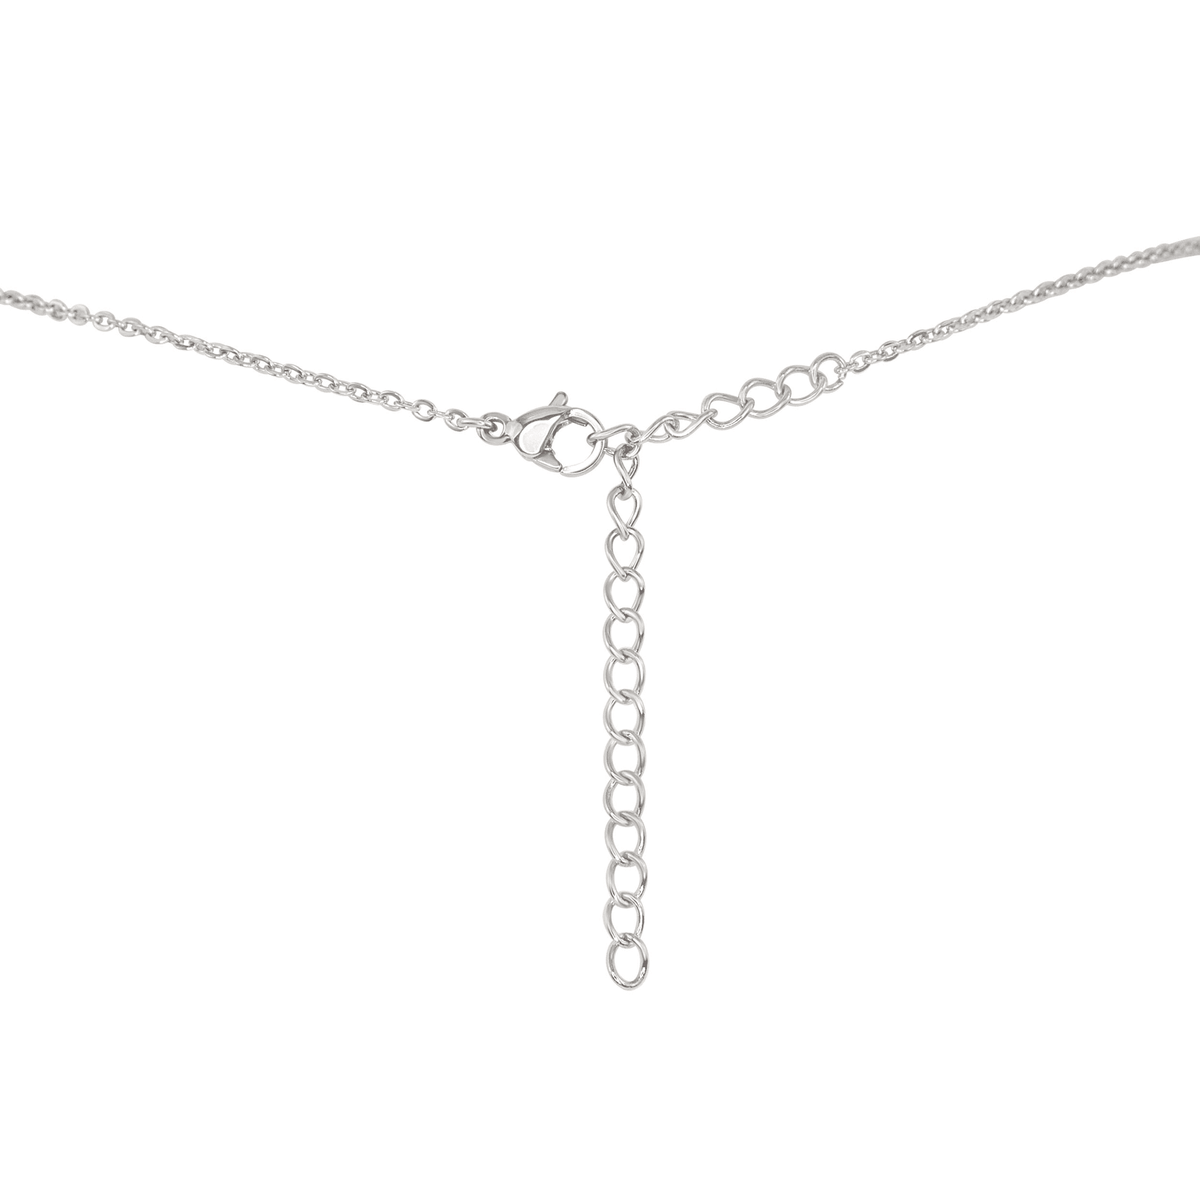 Amazonite Boho Lariat Necklace - Amazonite Boho Lariat Necklace - Sterling Silver - Luna Tide Handmade Crystal Jewellery